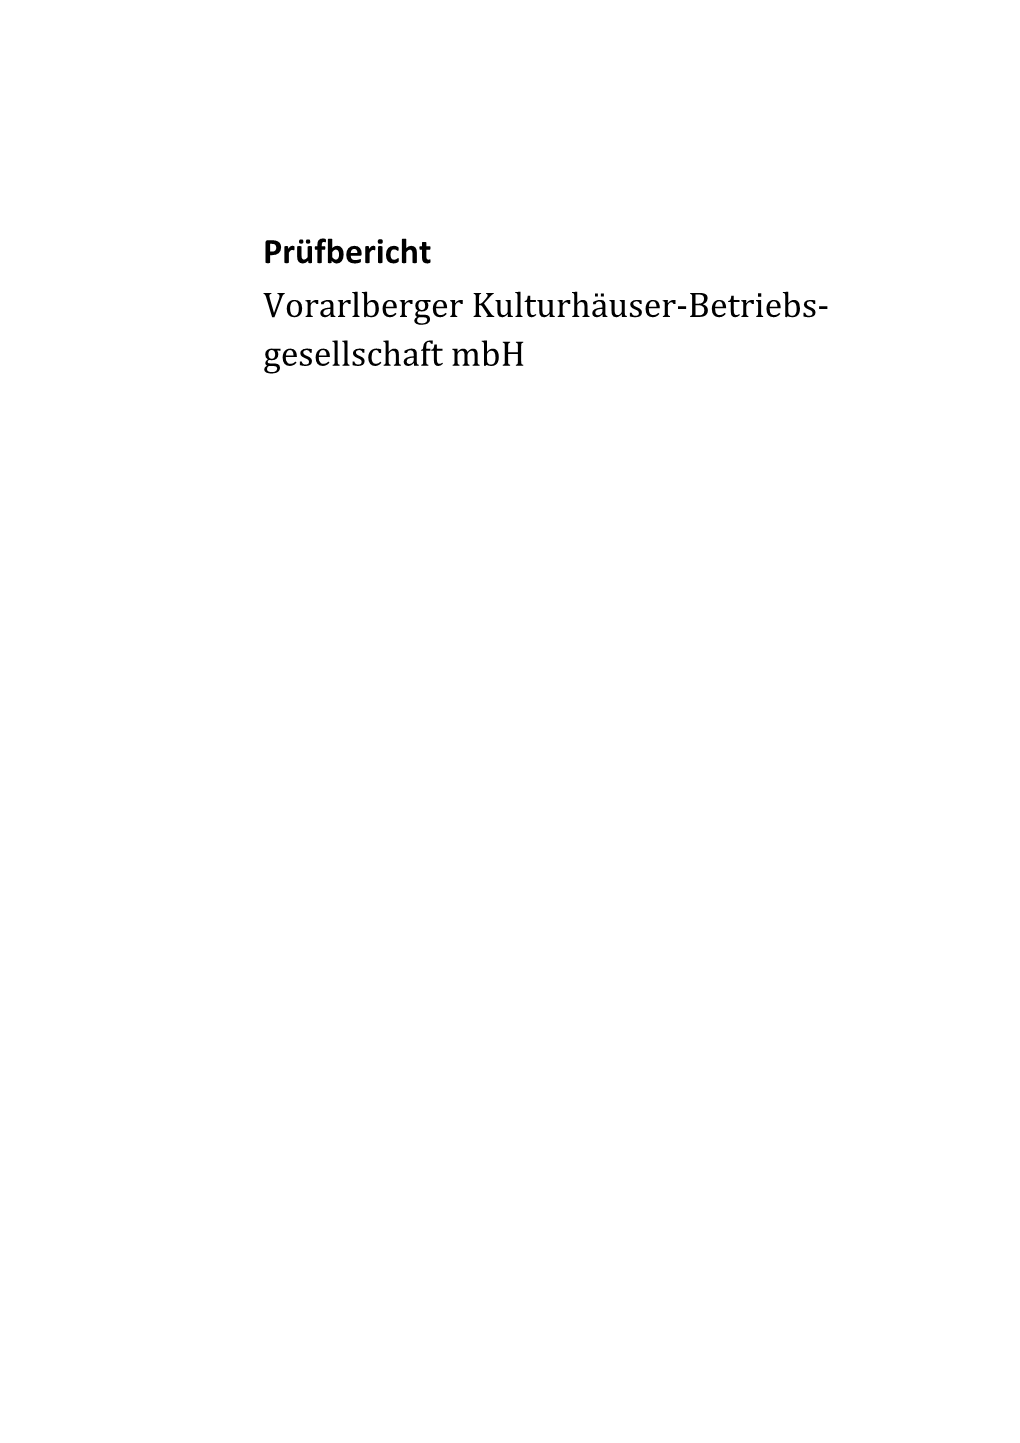 Prüfbericht Vorarlberger Kulturhäuser Betriebs Gesellschaft